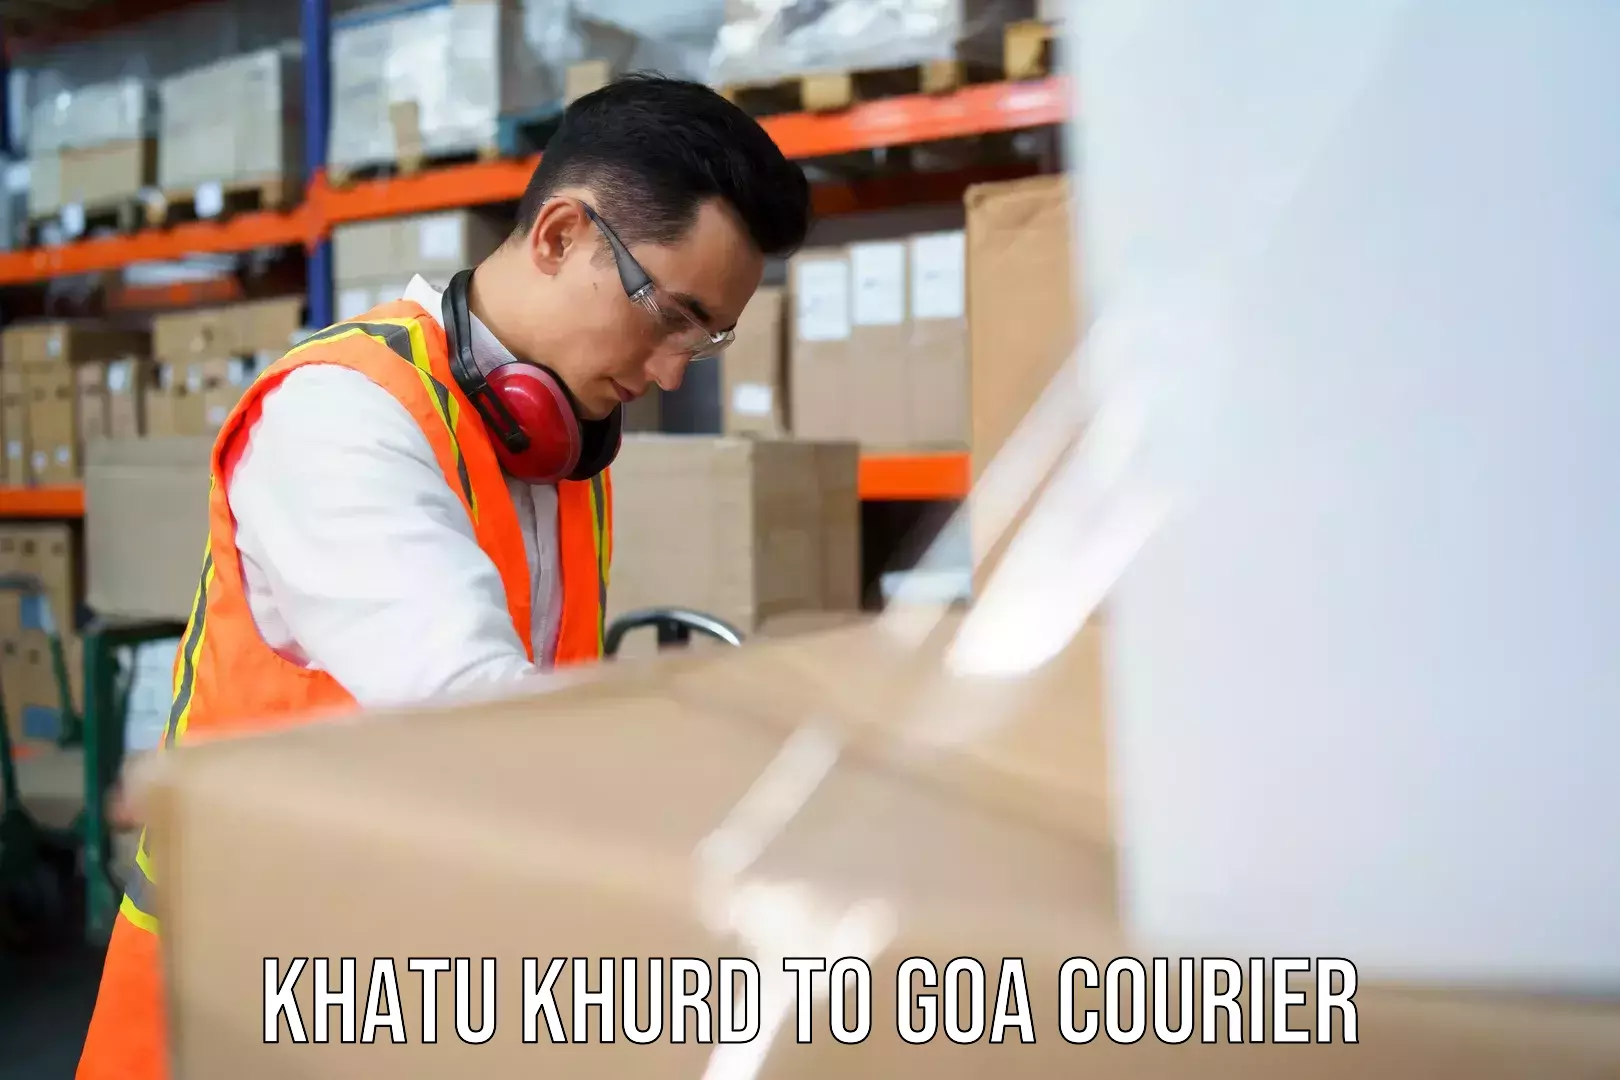 Nationwide shipping capabilities in Khatu Khurd to Ponda